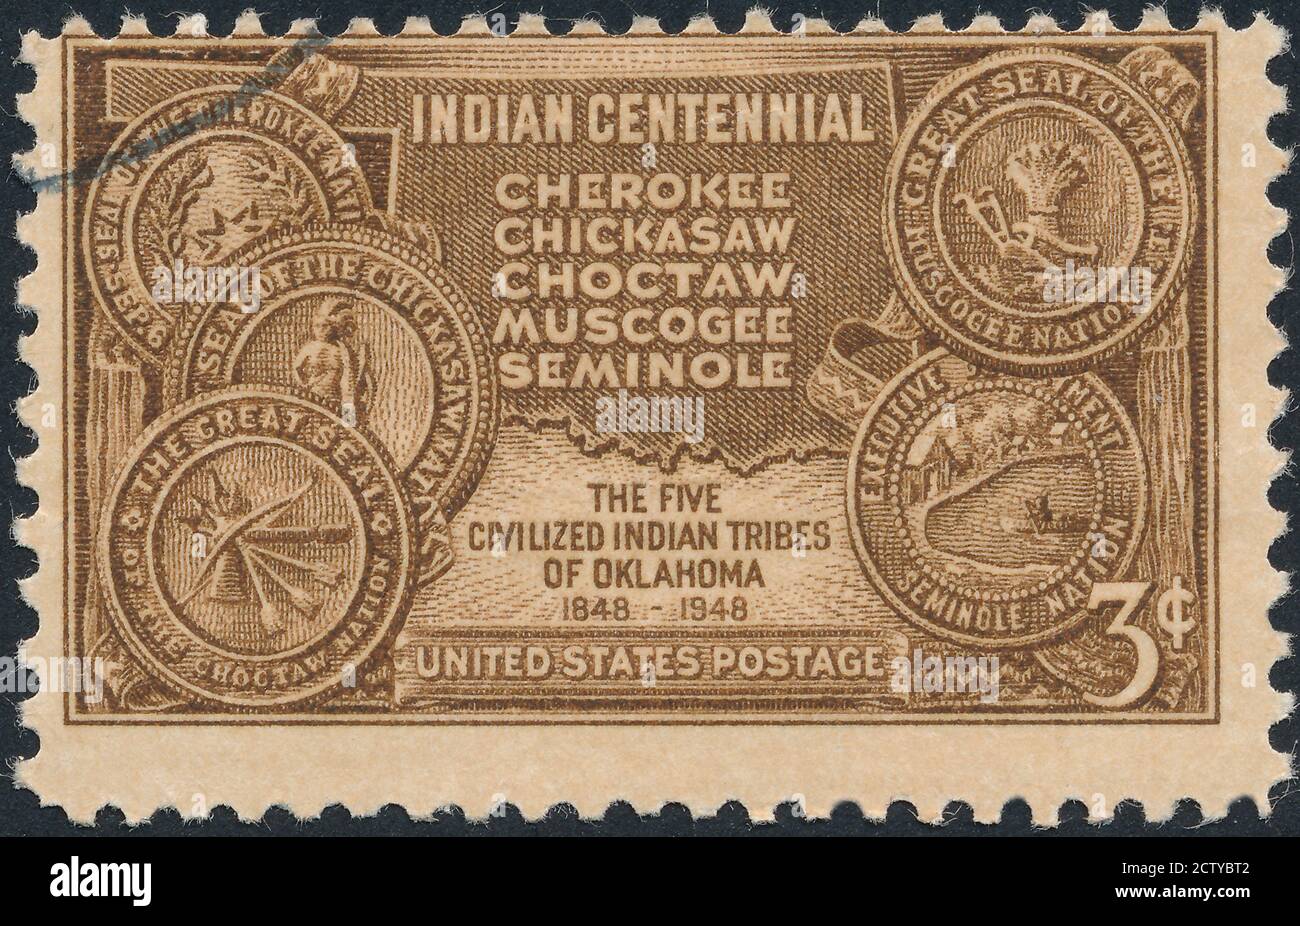 Photo du timbre du territoire indien de l'Oklahoma Oklahoma, États-Unis, Culture Cherokee, ethnicité Cherokee, Culture indienne.annulé Timbre de l'United Sta Banque D'Images